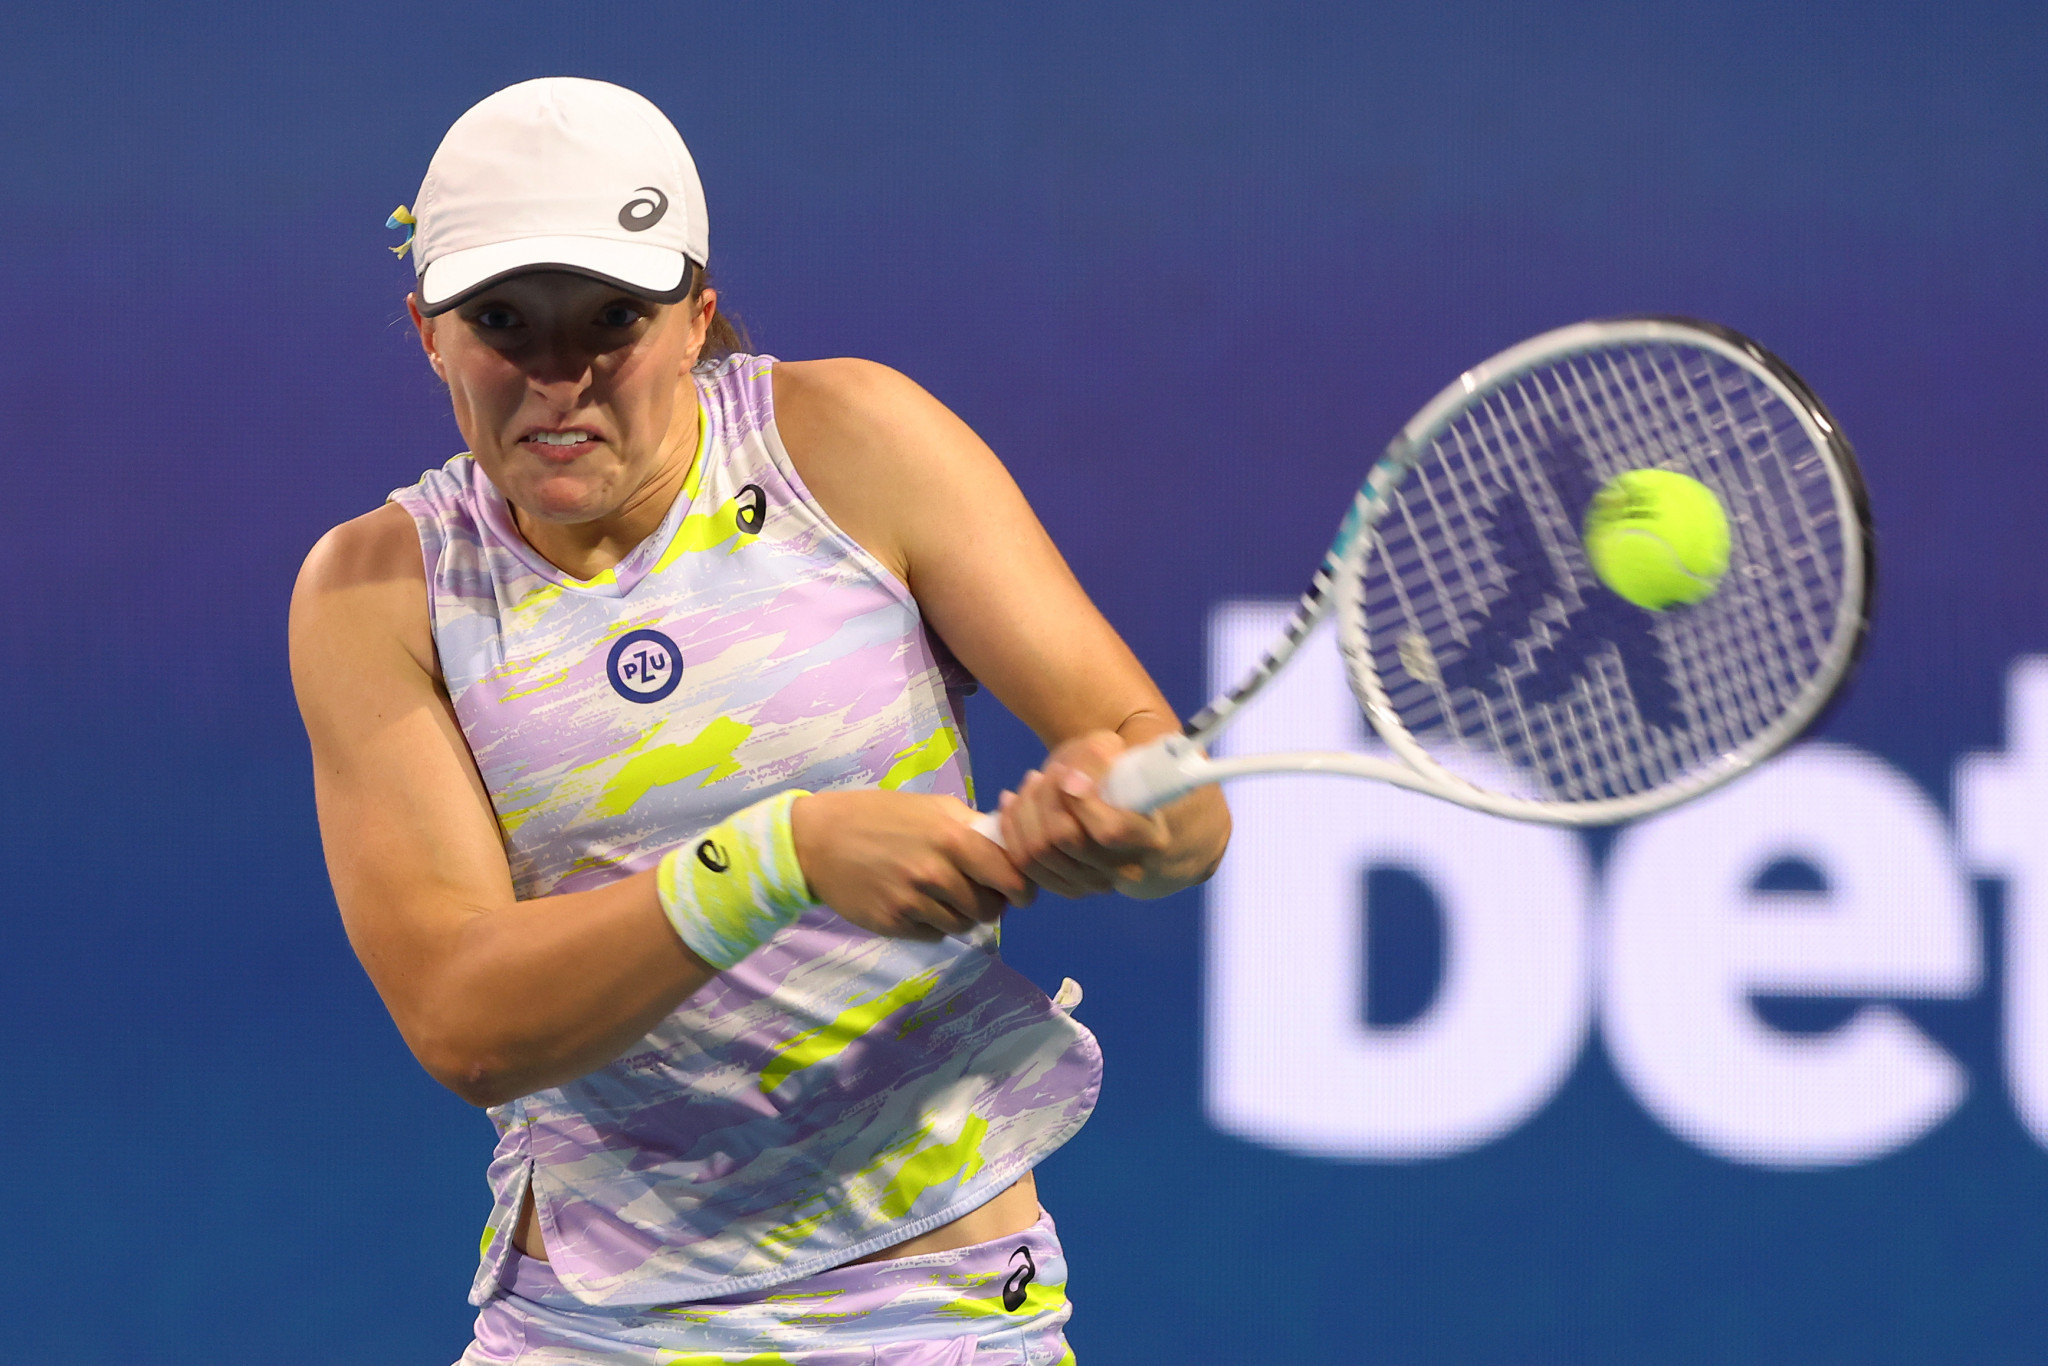 Świątek wins again to reach third consecutive WTA 1000 semi-final at Miami Open